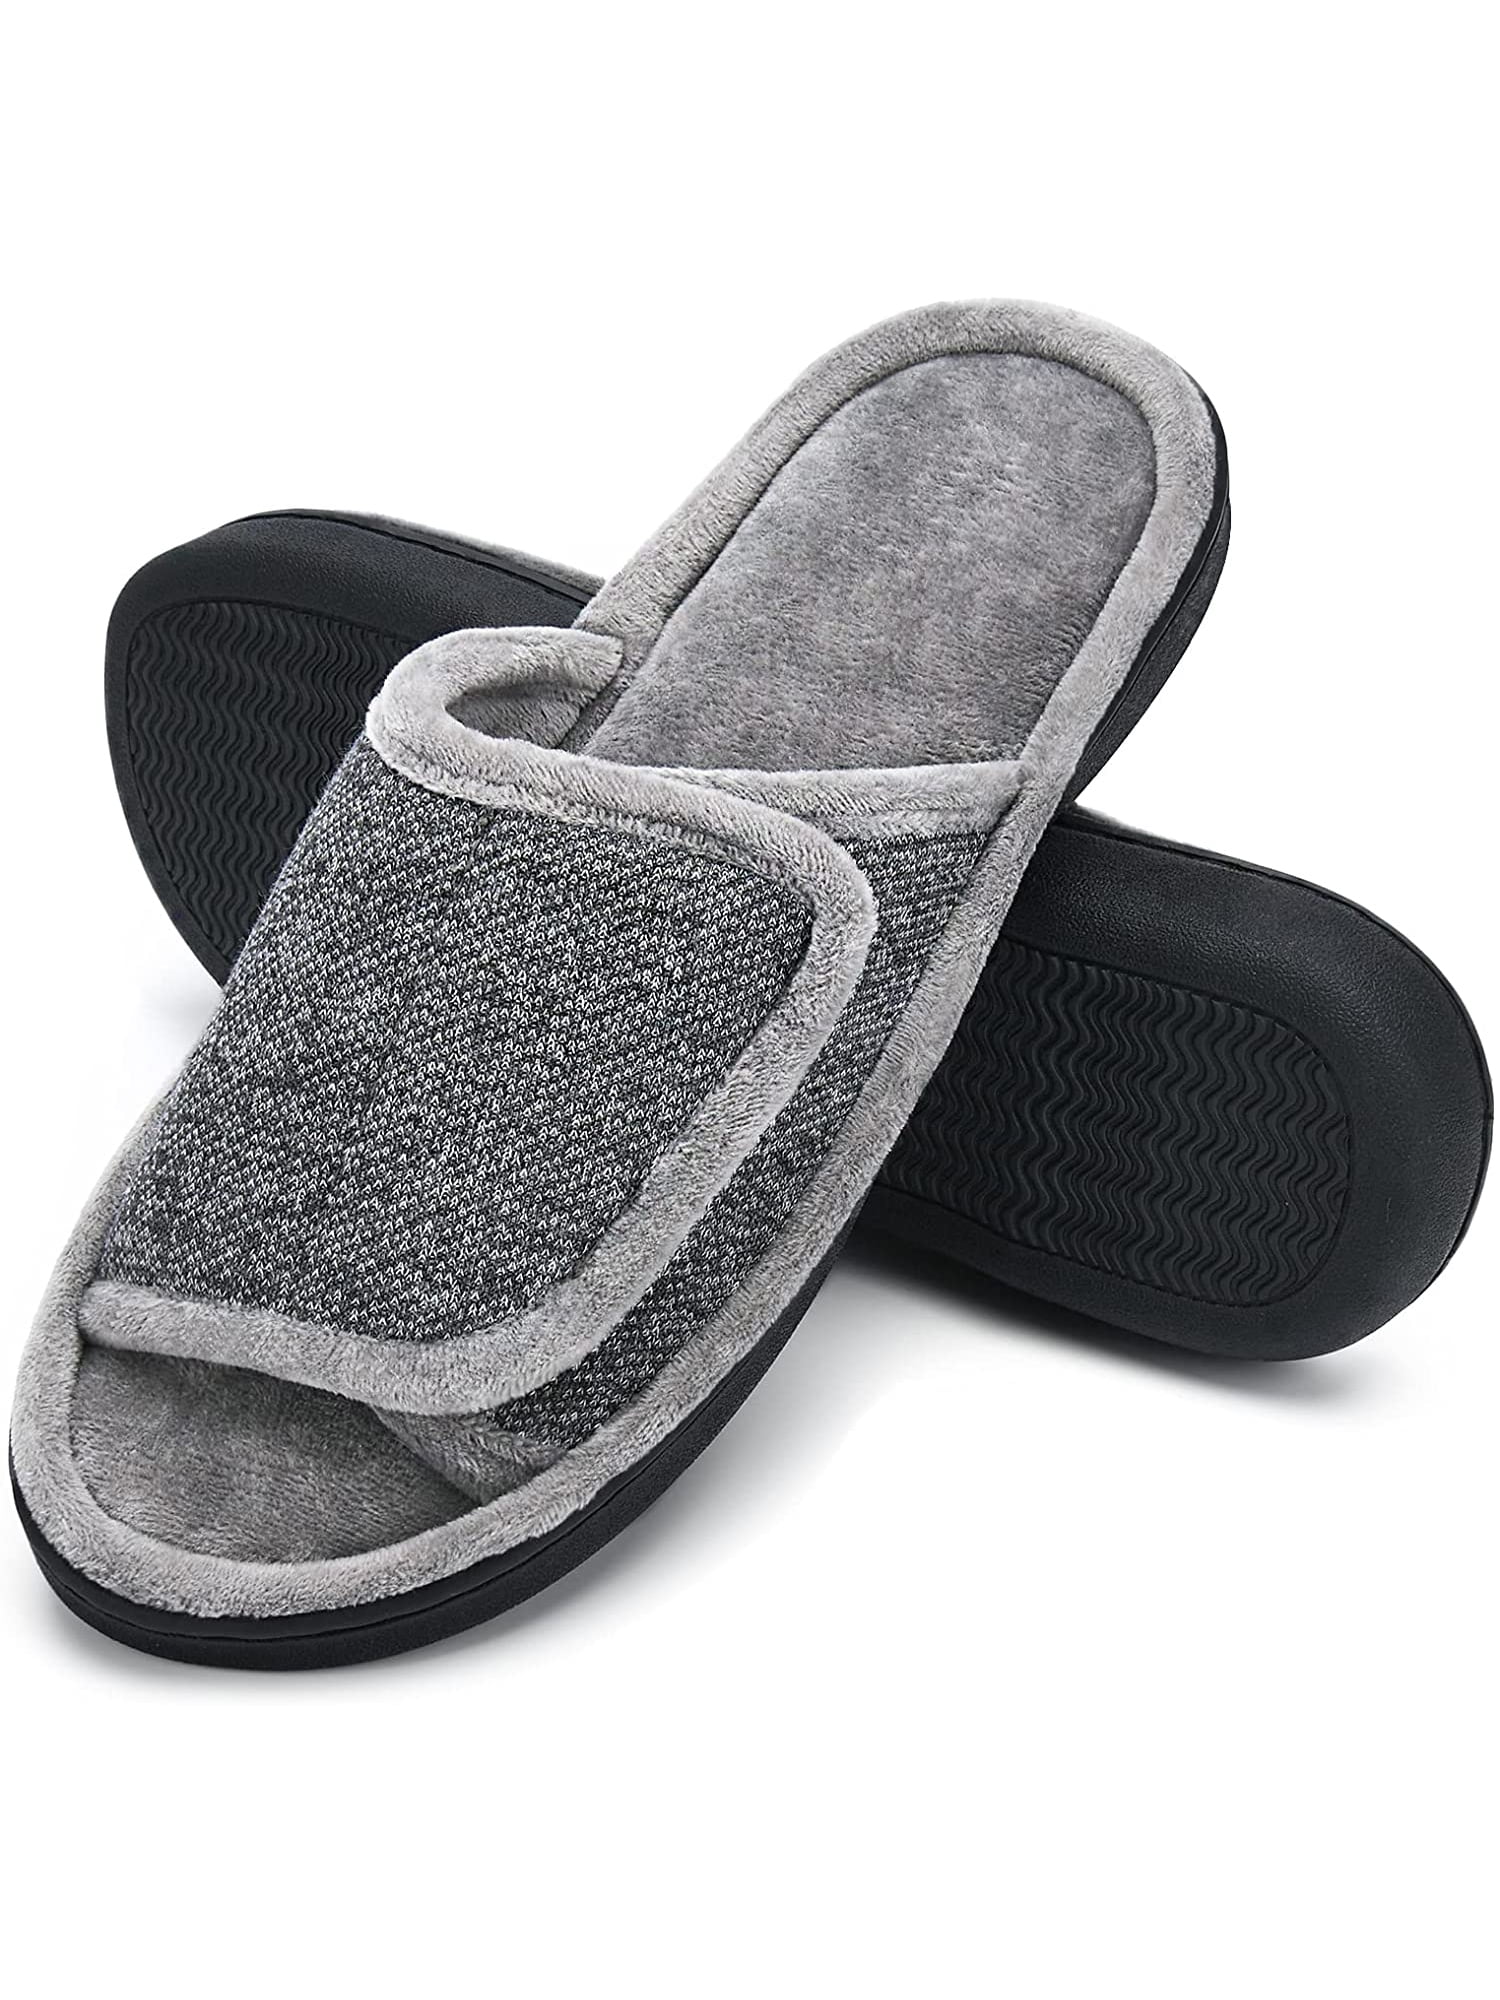 DL Adjustable Mens Slippers Memory Foam Open Toe House Slippers ...